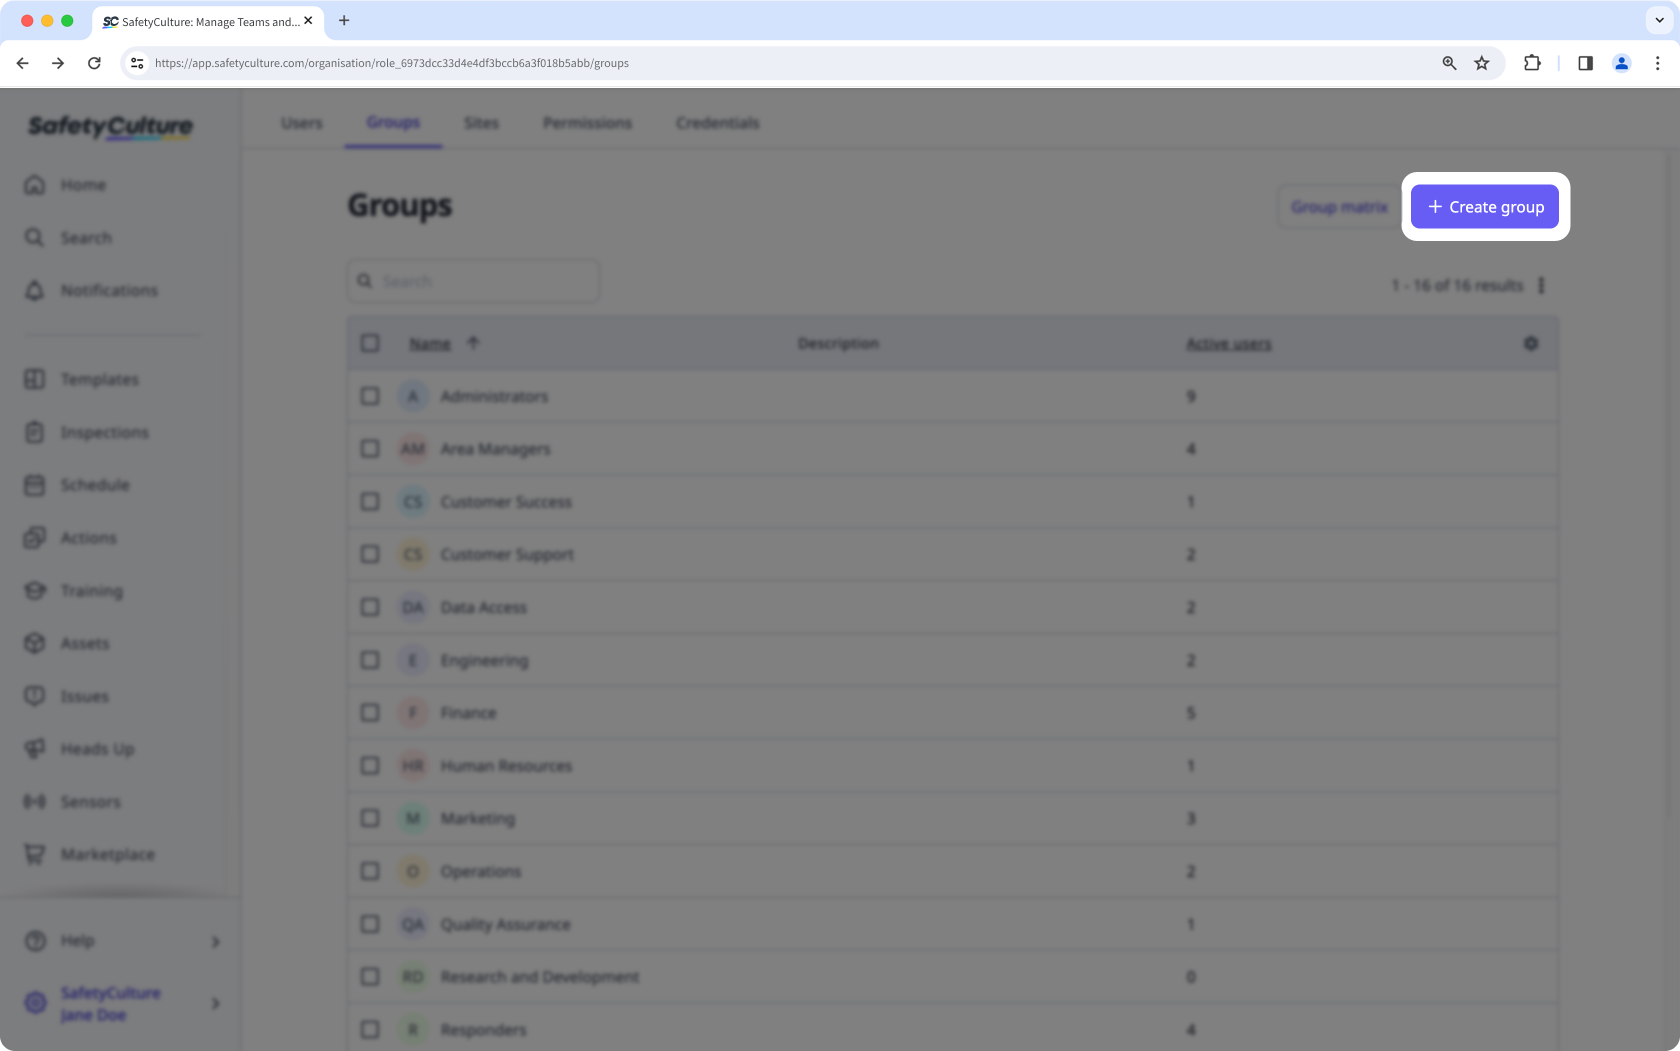 Create groups via the web app